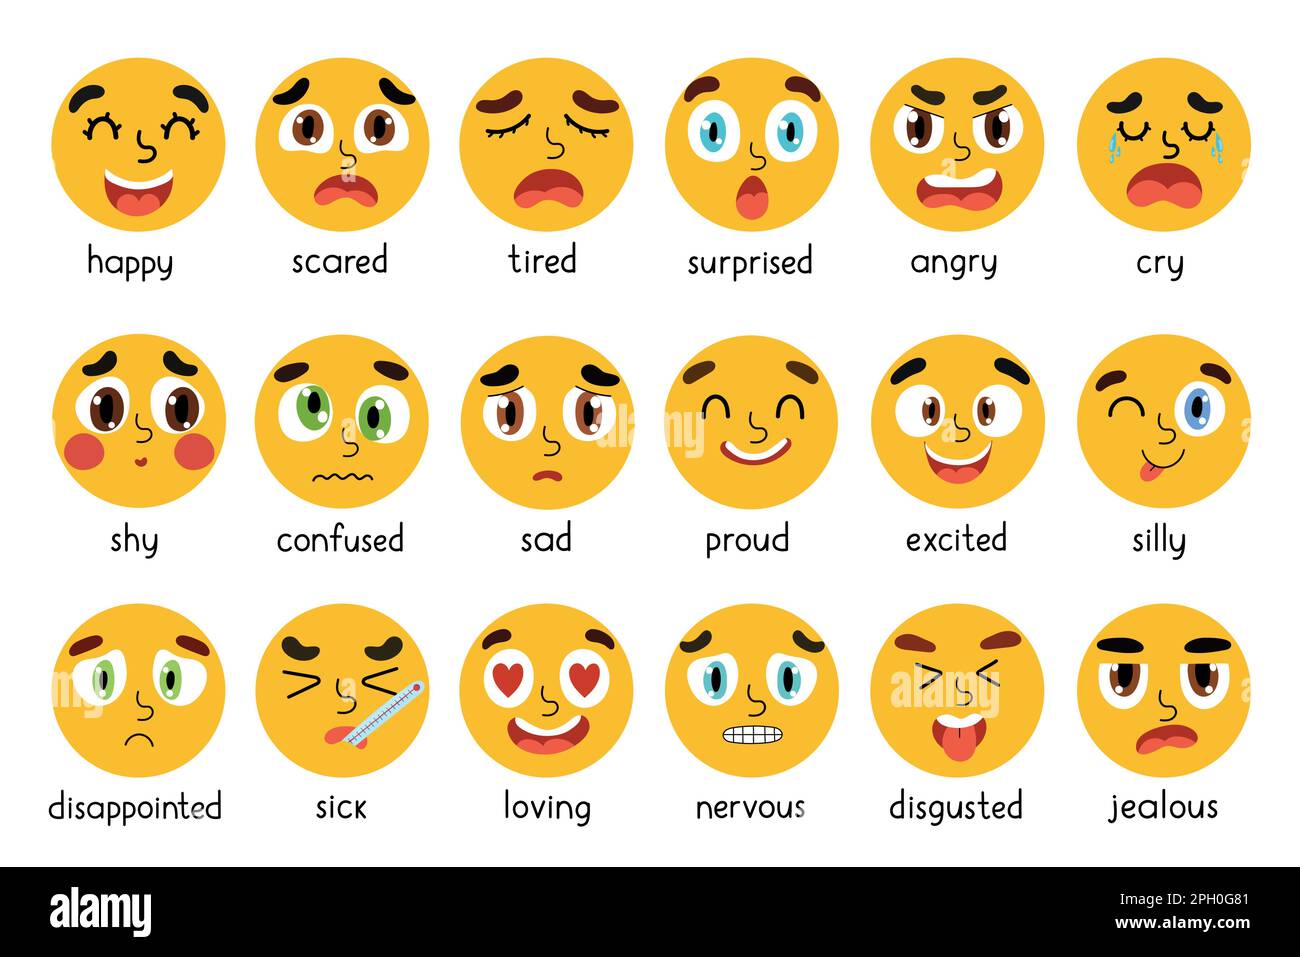 Funny emoji set. Different emotional expressions bundle Stock Vector ...